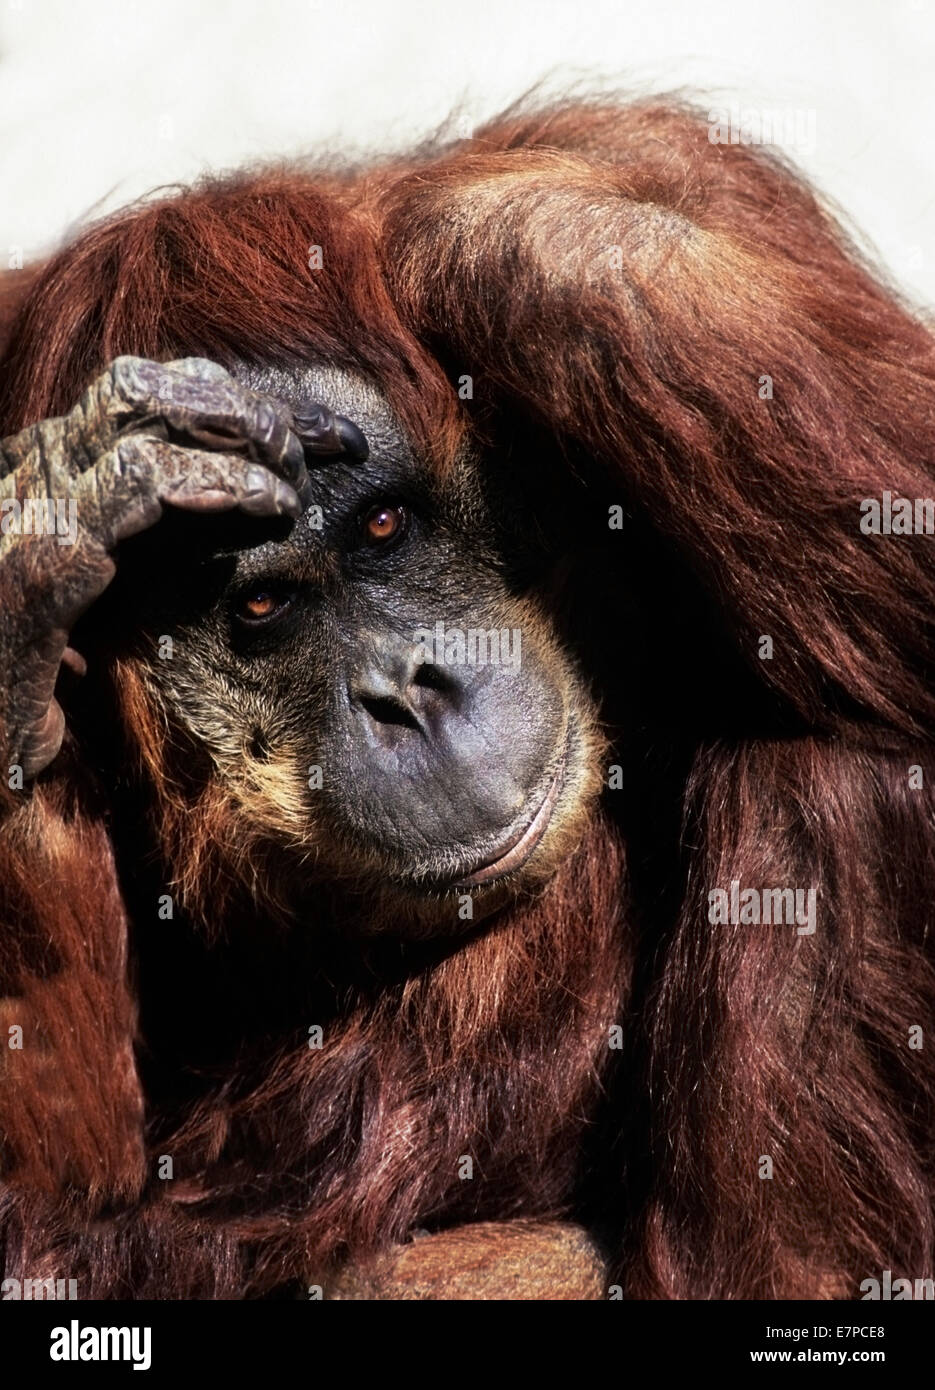 Orangutan (Pongo pygmaeus) an endangered species. Captive. Stock Photo